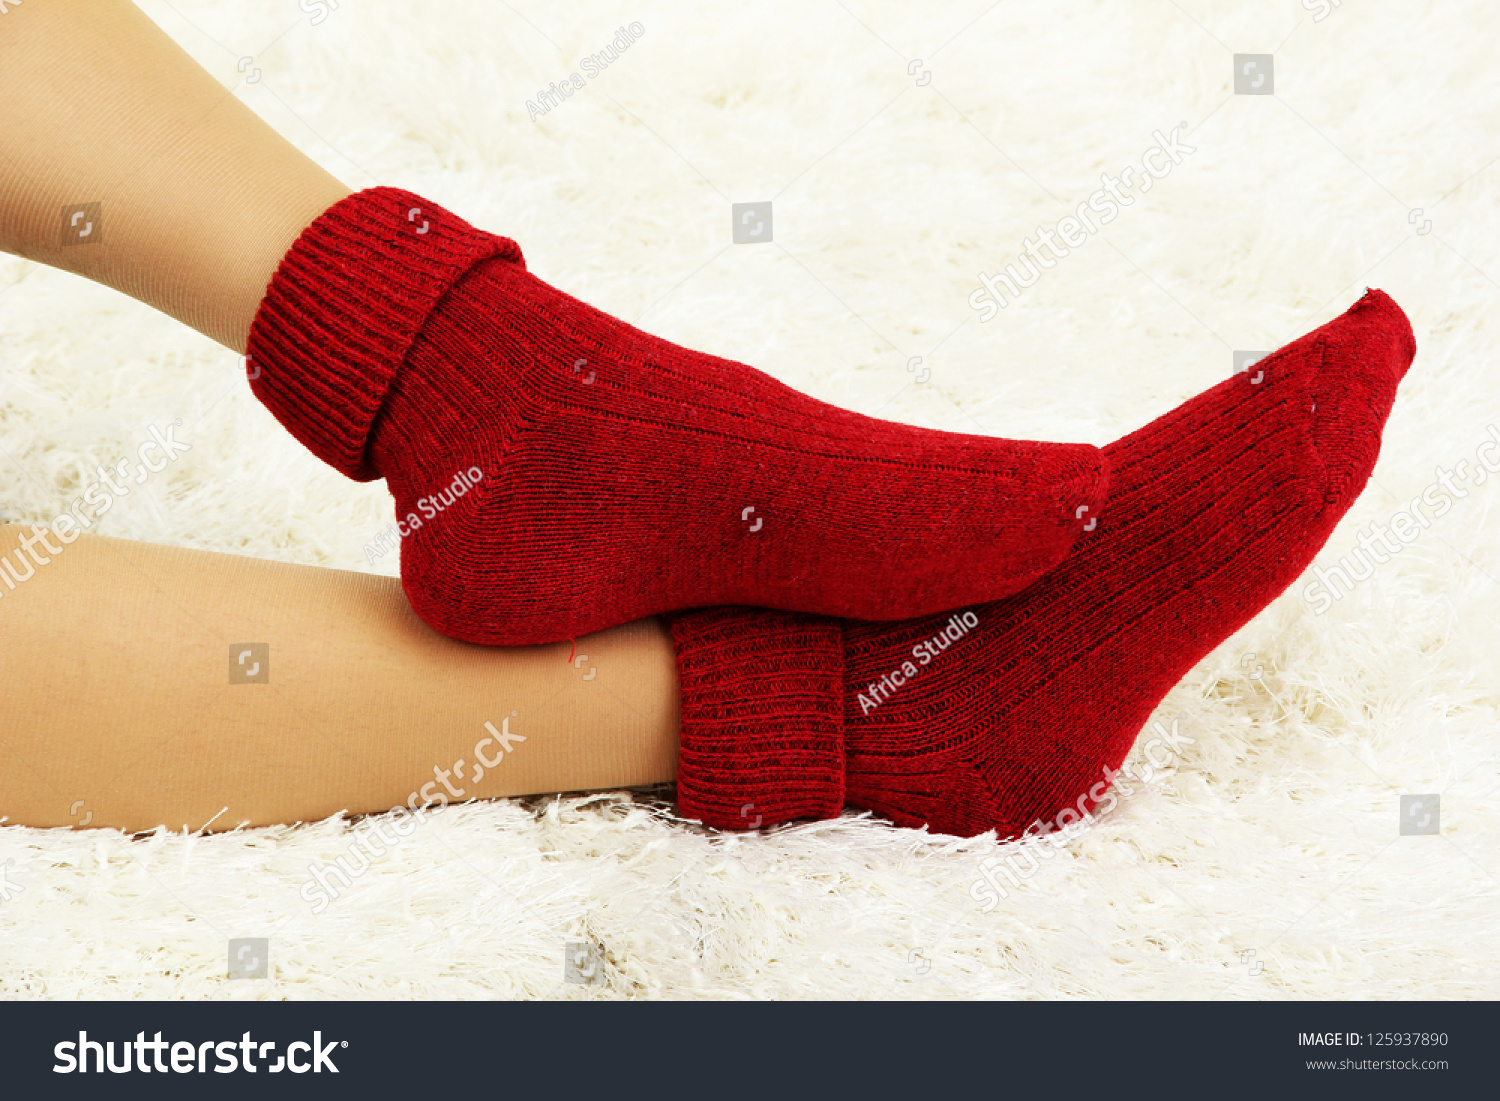 Female Legs In Colorful Socks On White Carpet Background Stock Photo ...